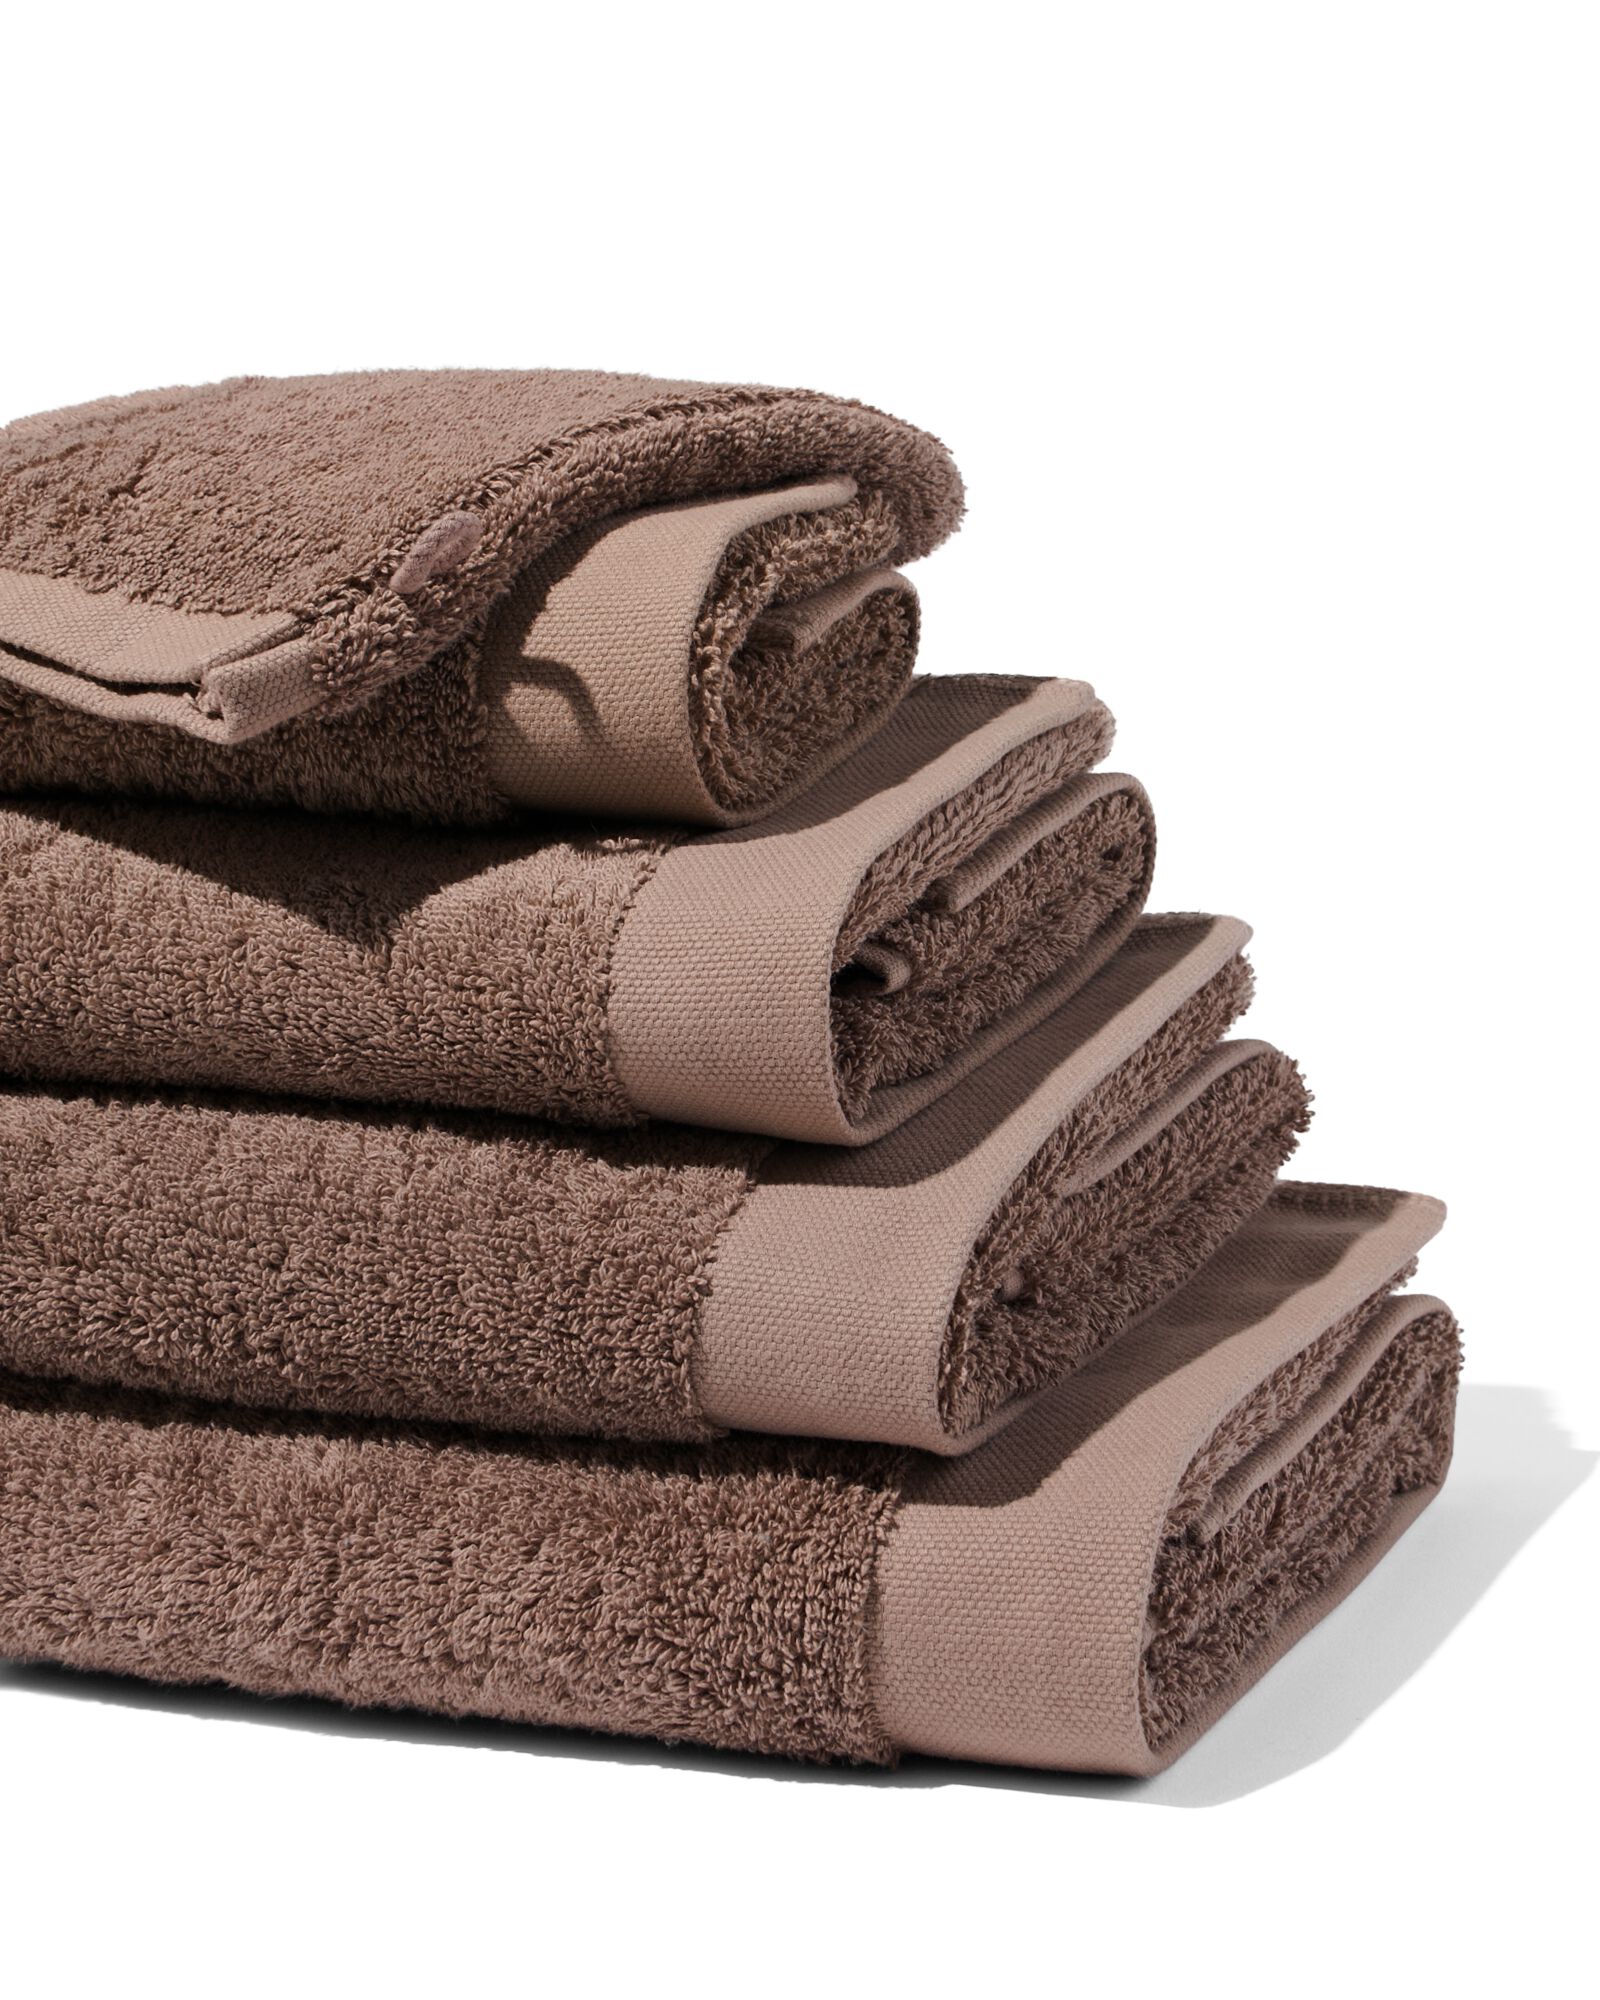 handdoek 70x140 hotelkwaliteit extra zacht taupe taupe handdoek 70 x 140 - 5230032 - HEMA